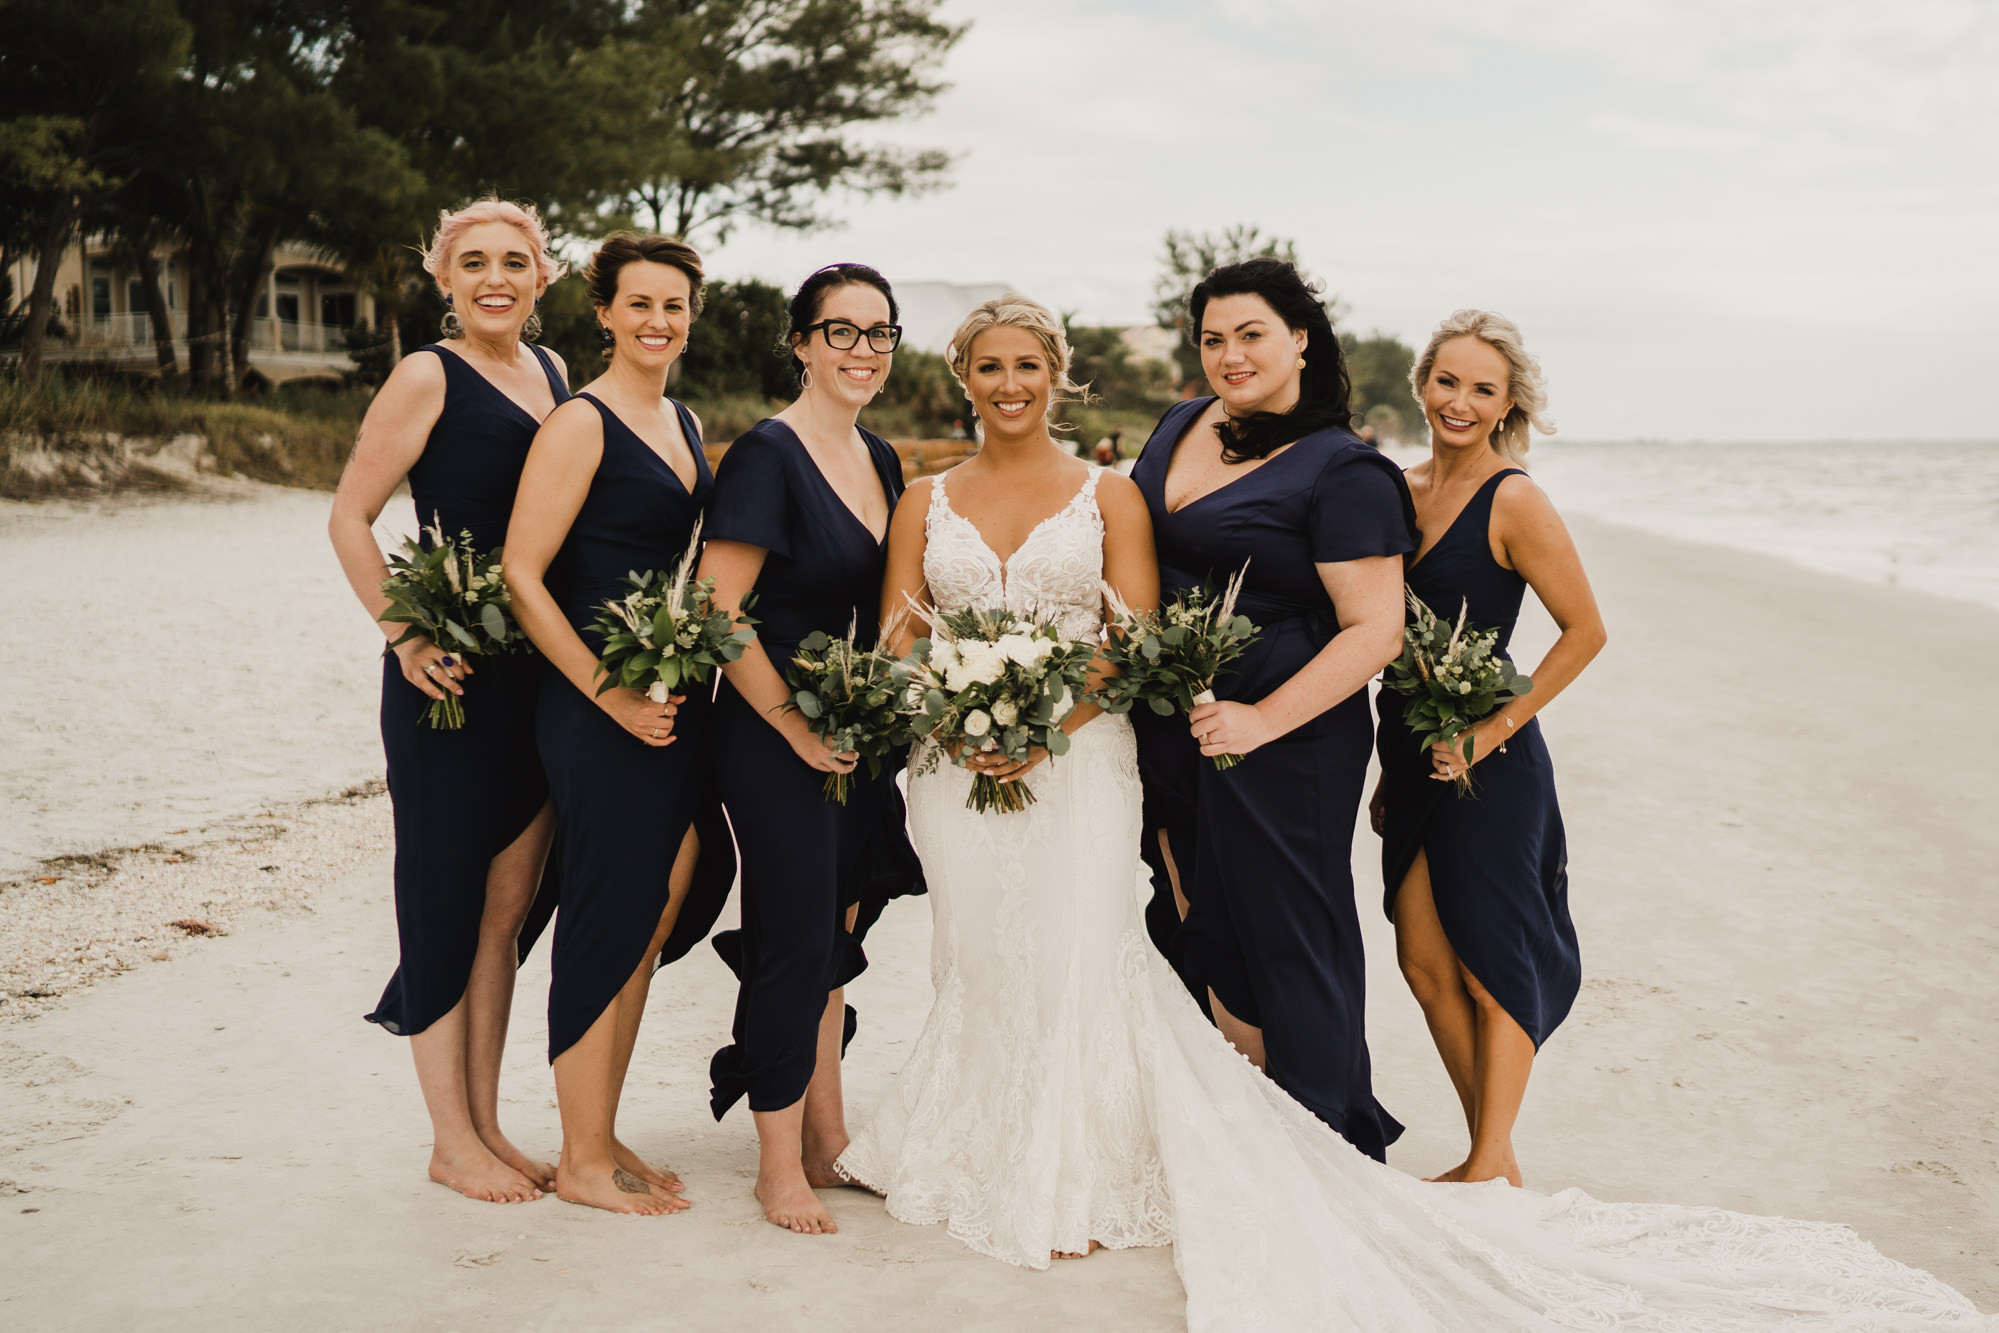 Mismatching Navy Midi Bridesmaids Wedding Dresses | Beach Wedding Inspiration | White and Greenery Bouquet Ideas Treasure Island Florist Monarch Events and Design